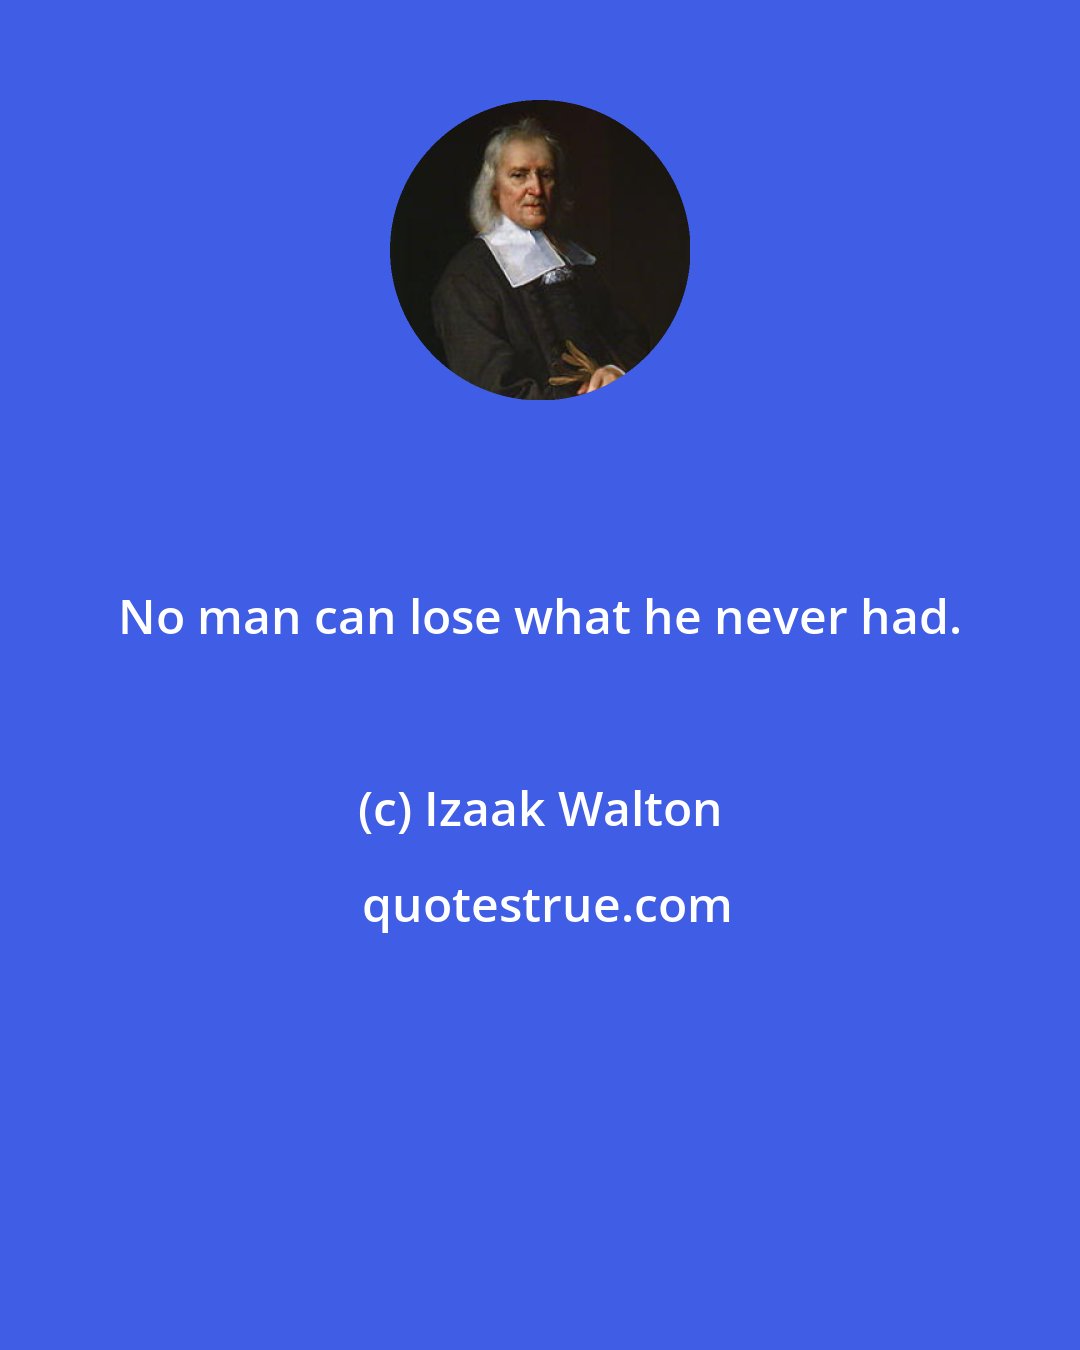 Izaak Walton: No man can lose what he never had.